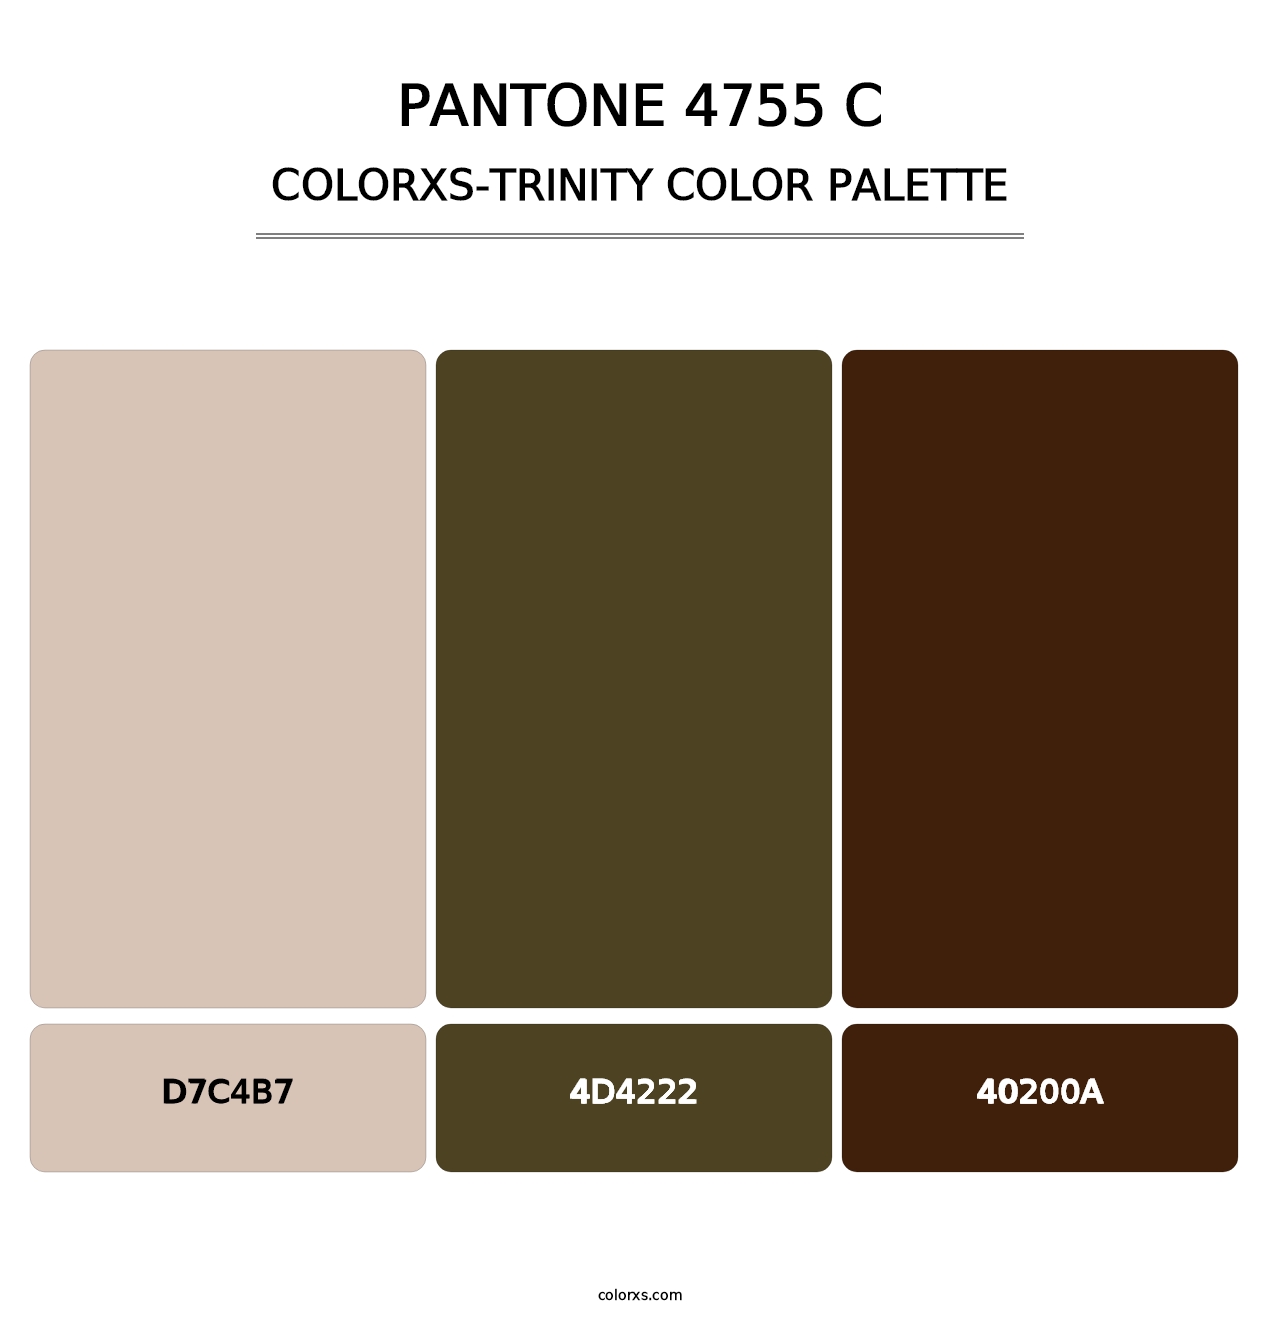 PANTONE 4755 C - Colorxs Trinity Palette